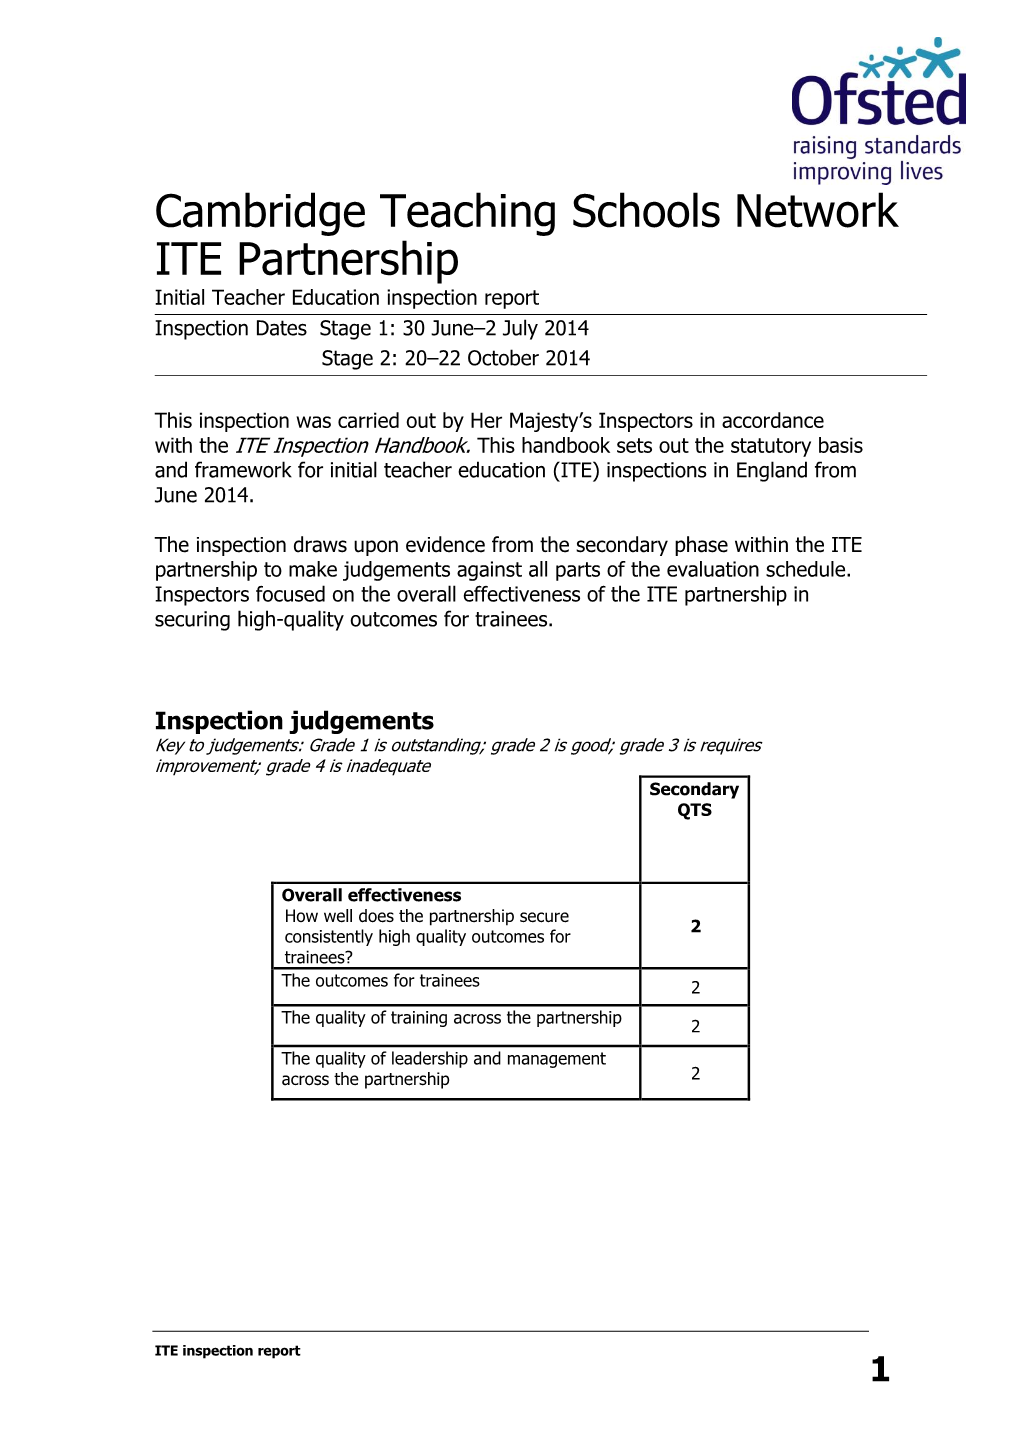 Cambridge Teaching Schools Network ITE Partnership